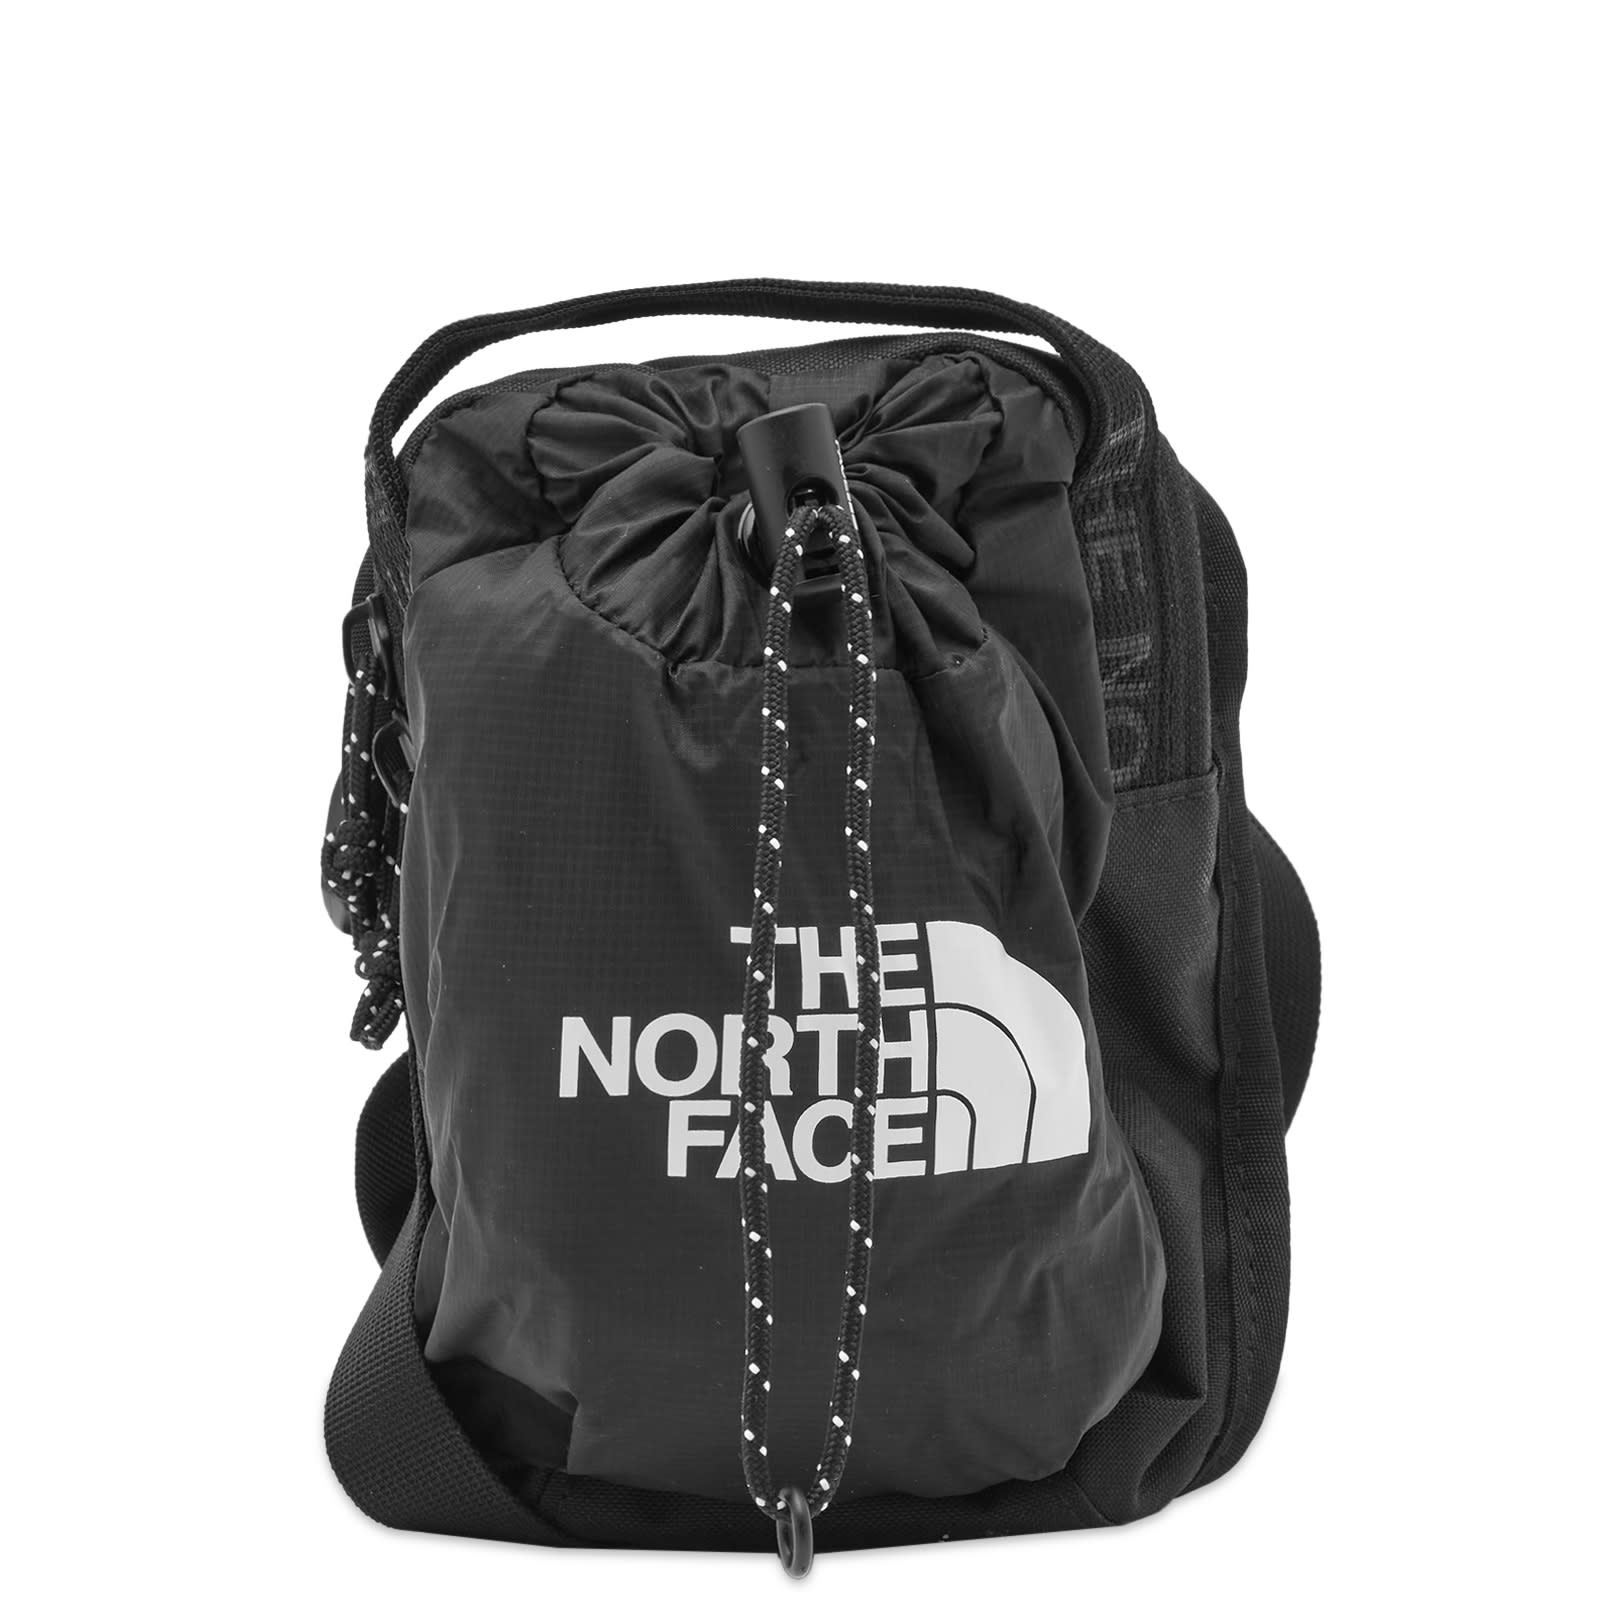 The North Face Bozer Cross Body Bag - 1